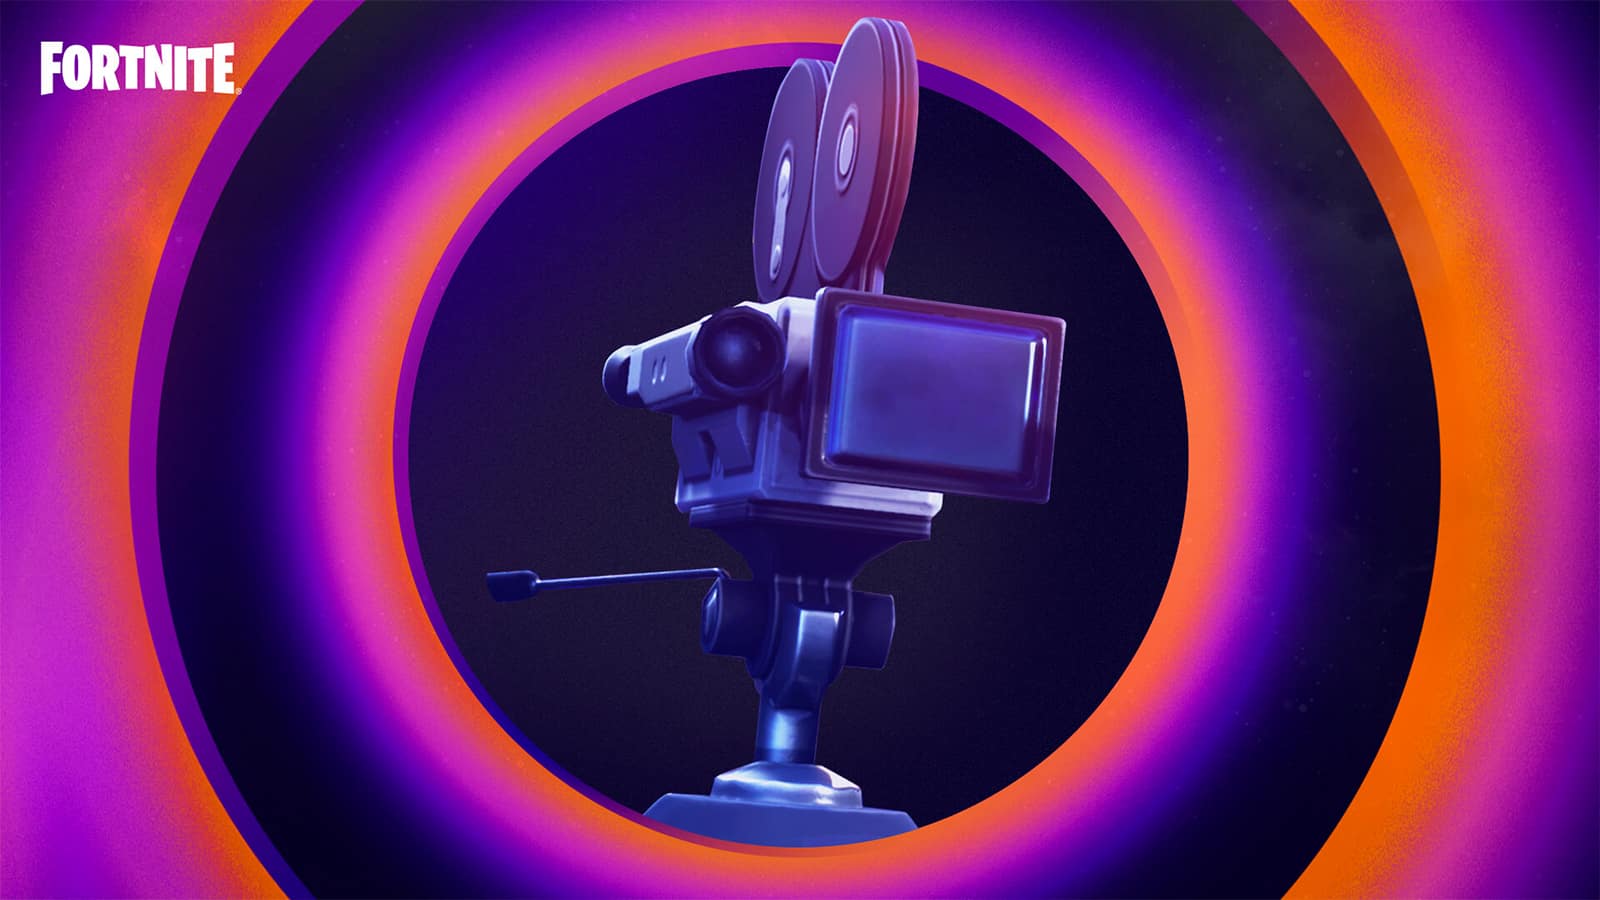 A movie camera representing Fortnite's Shortnitemares film festival